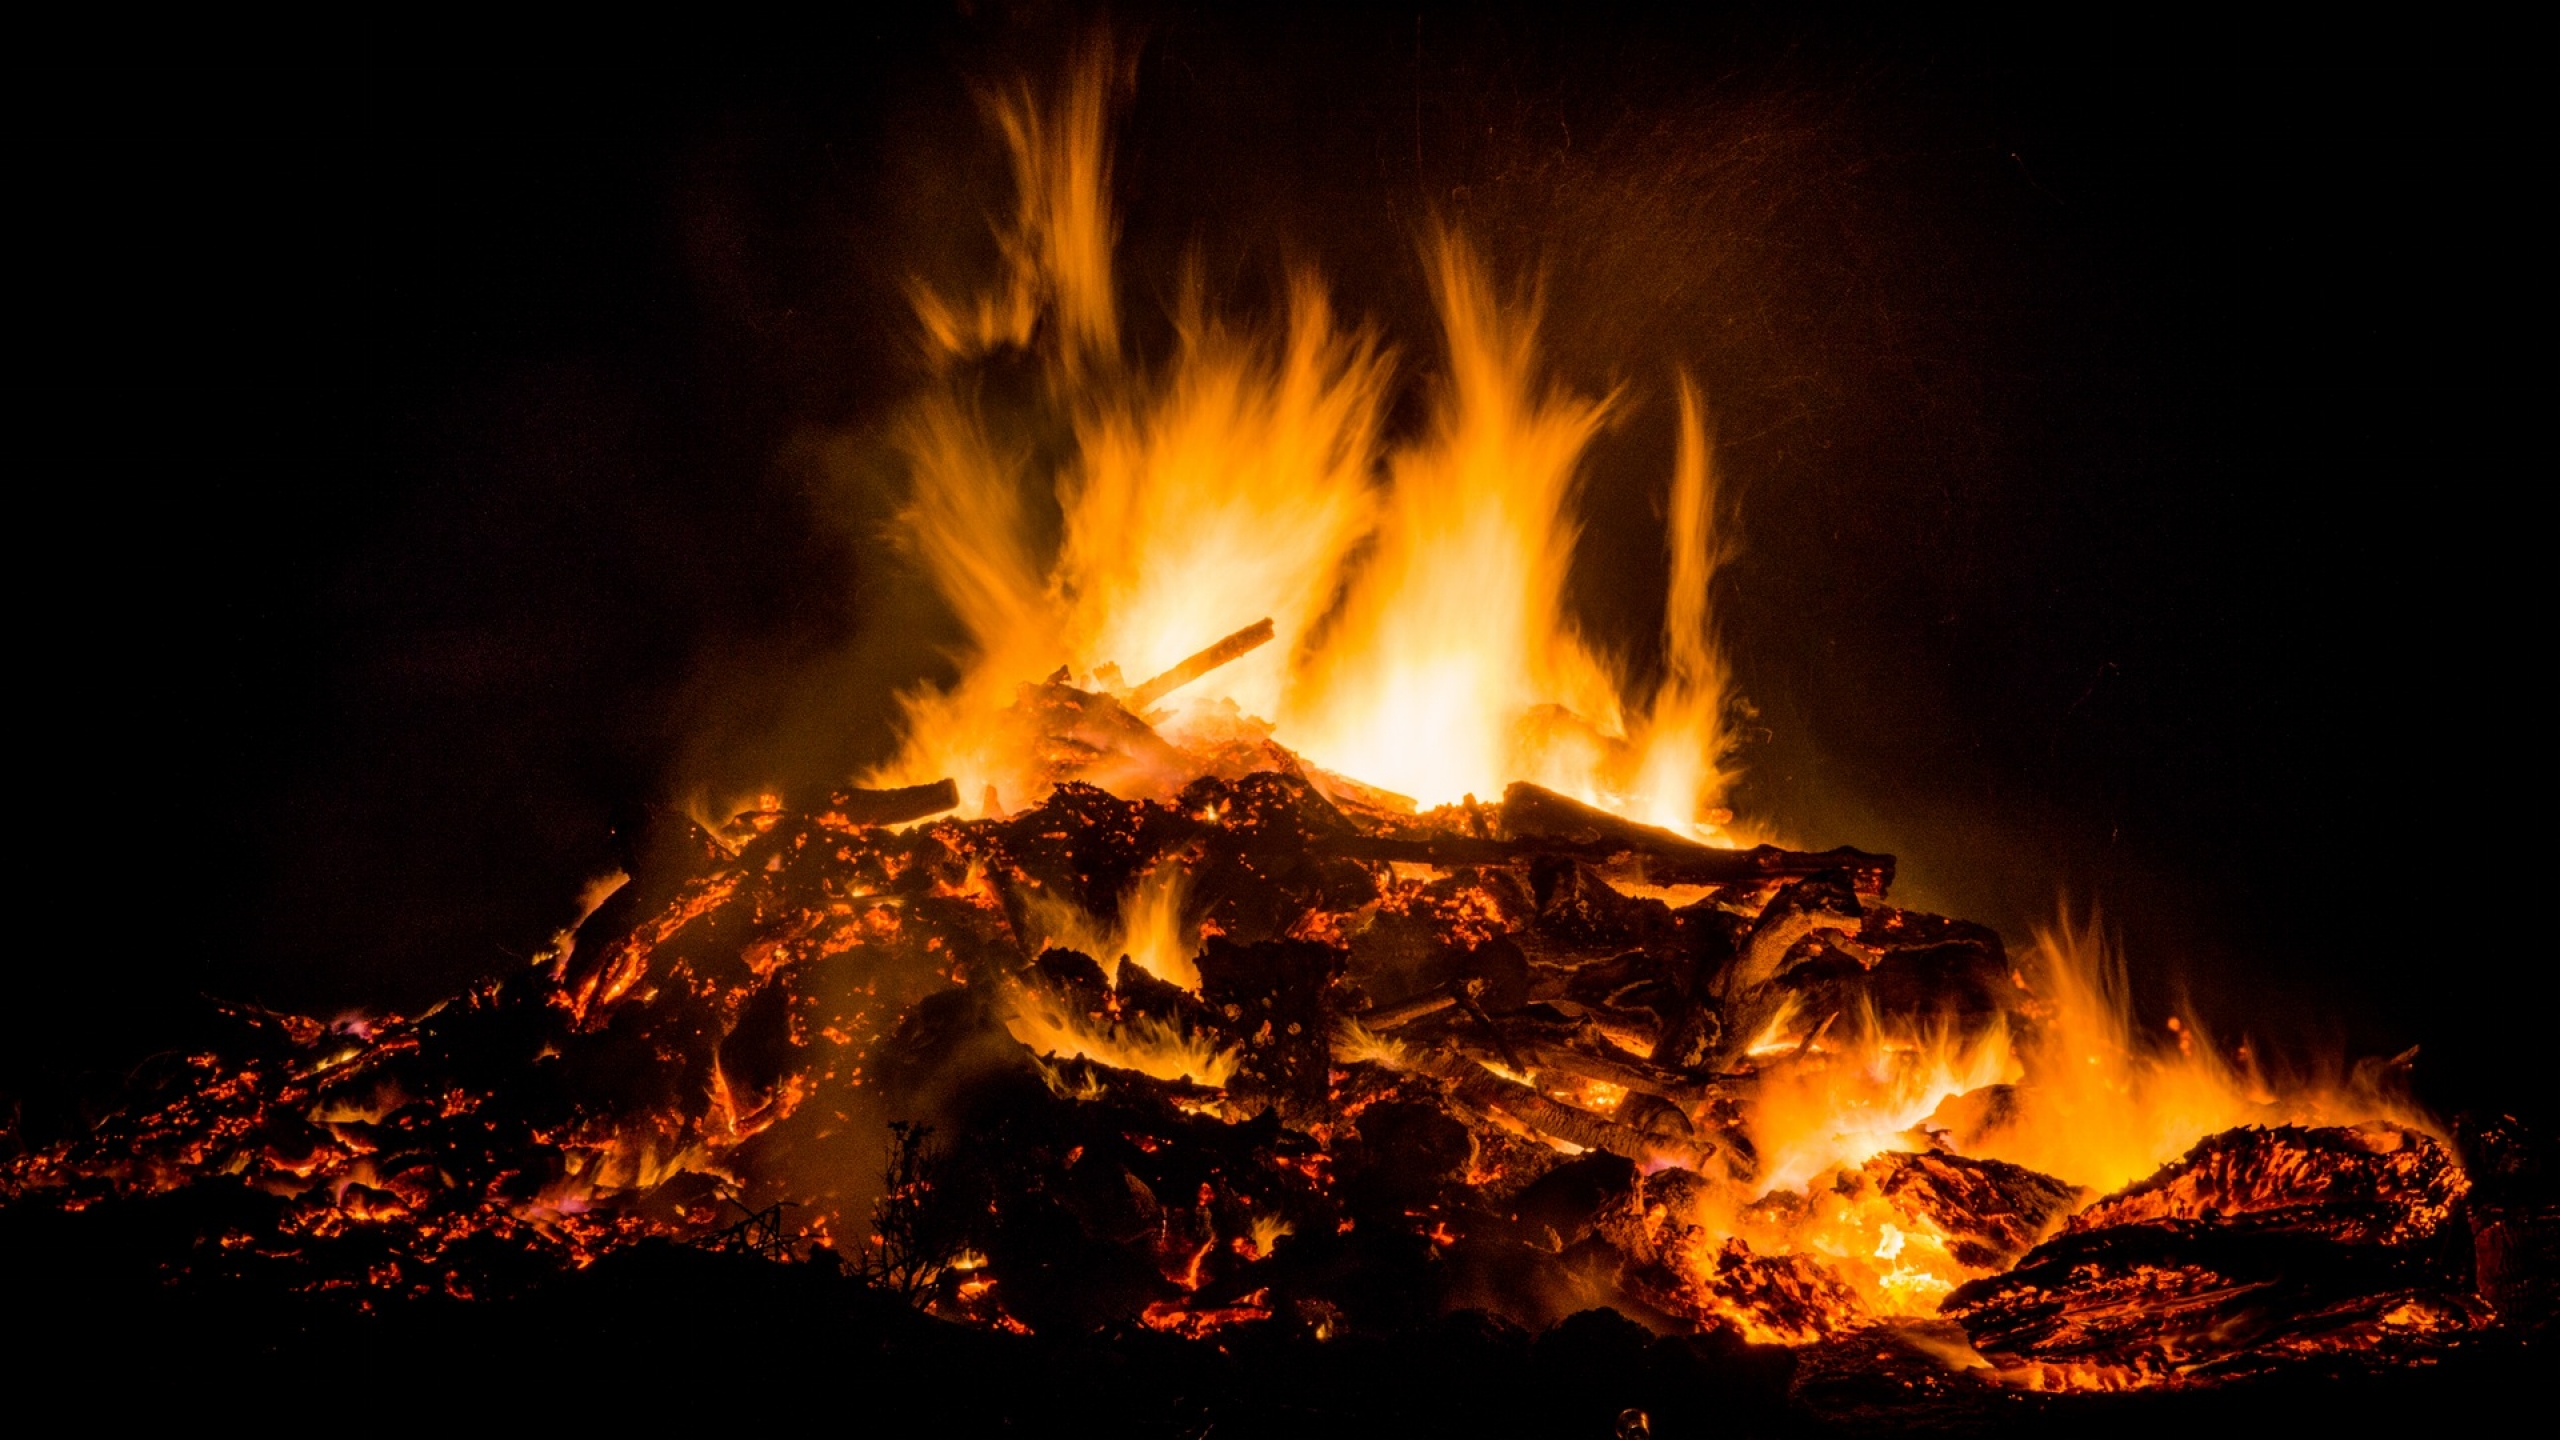 photography, fire, bonfire, log, night